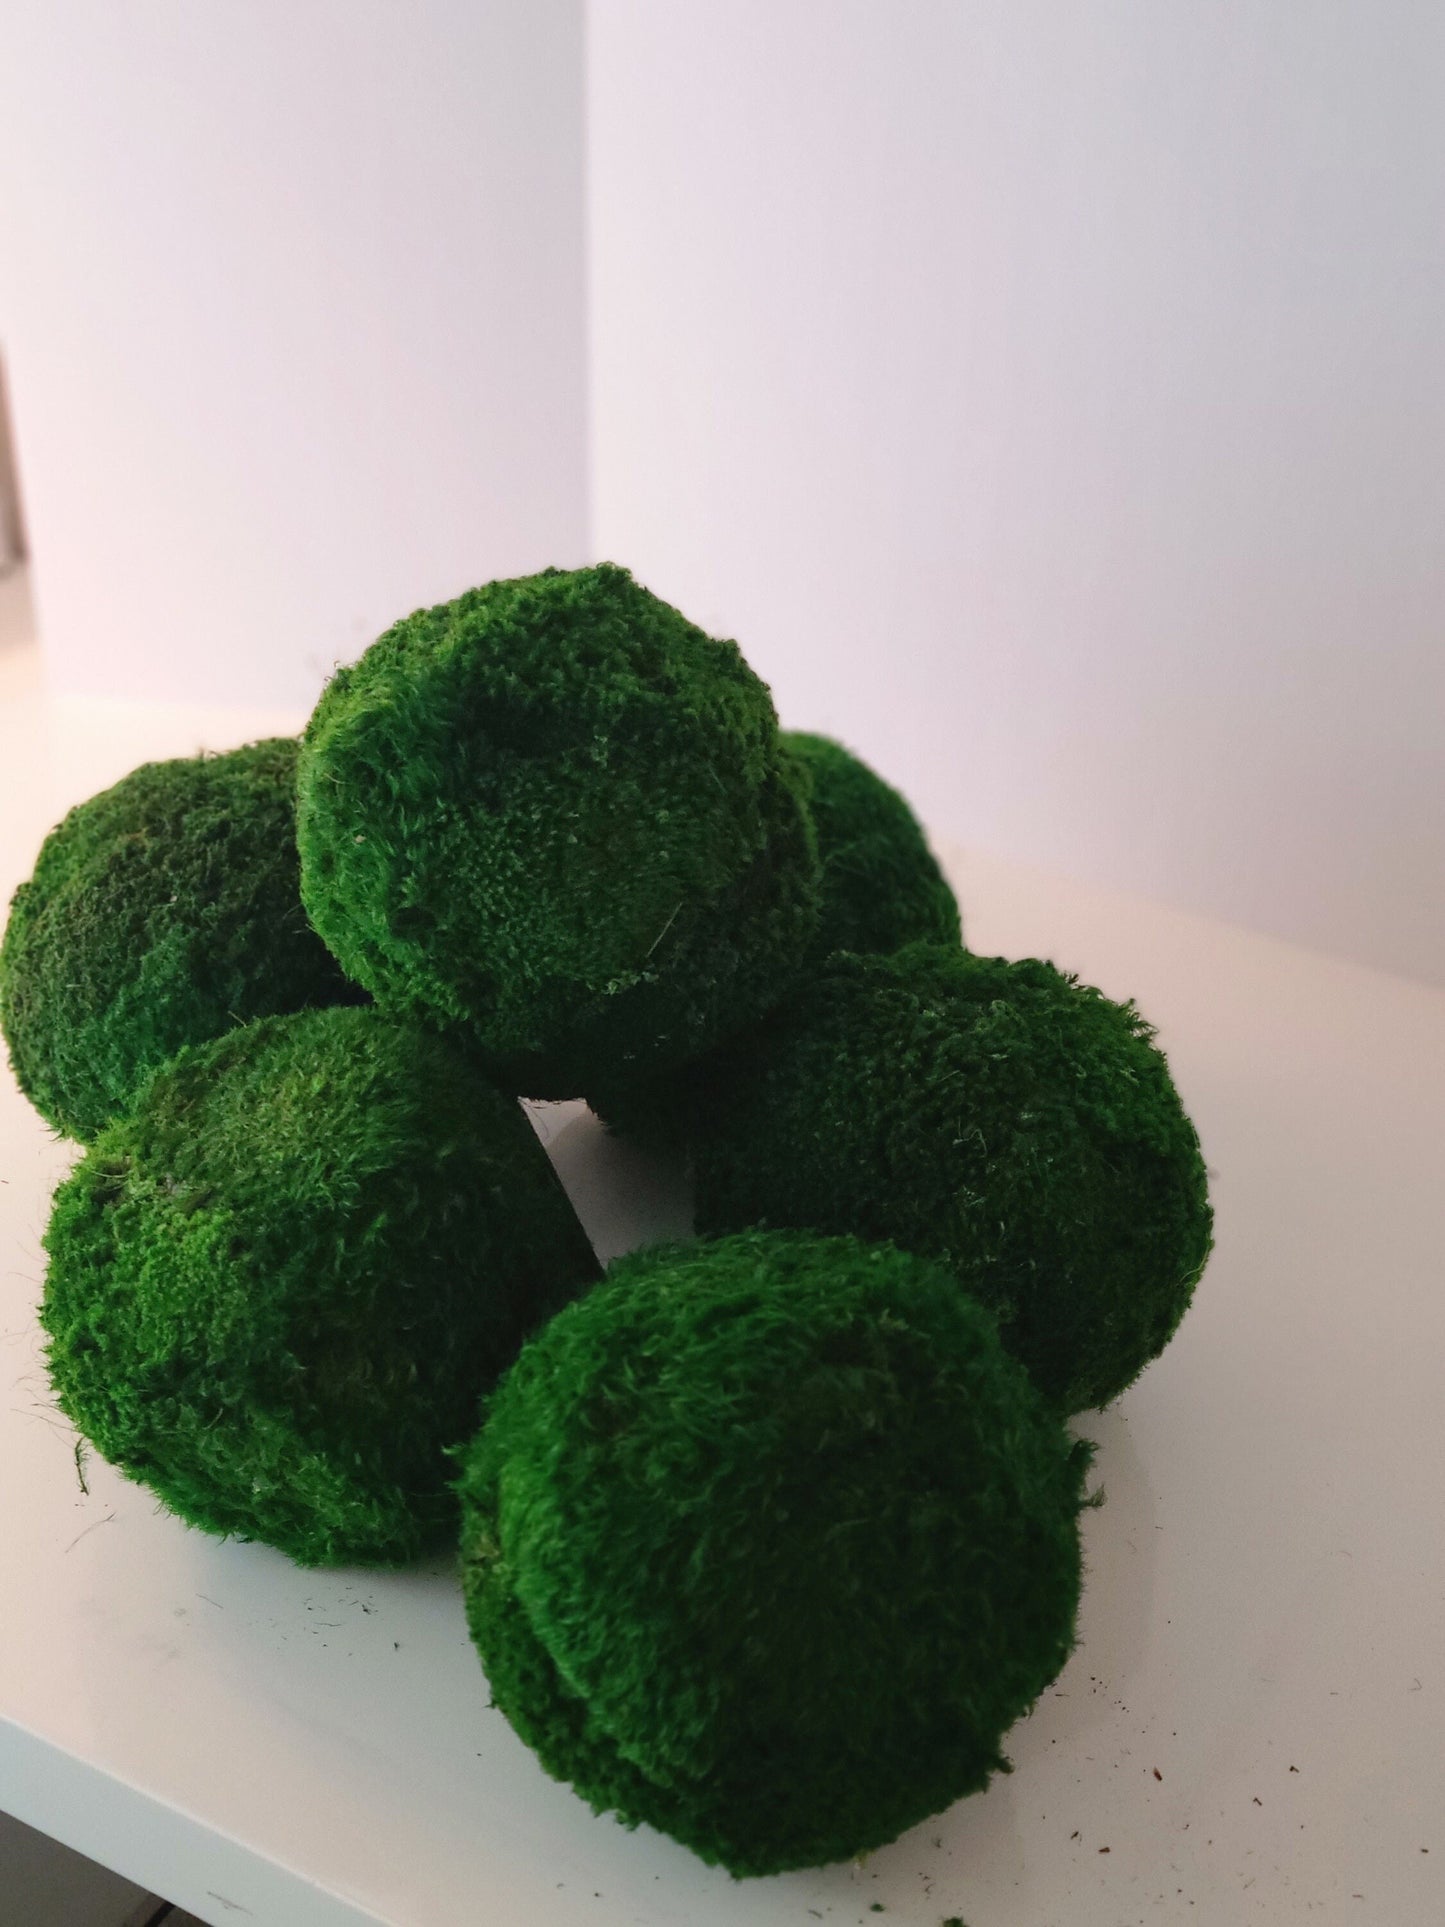 5" Decorative Preserved Moss Balls